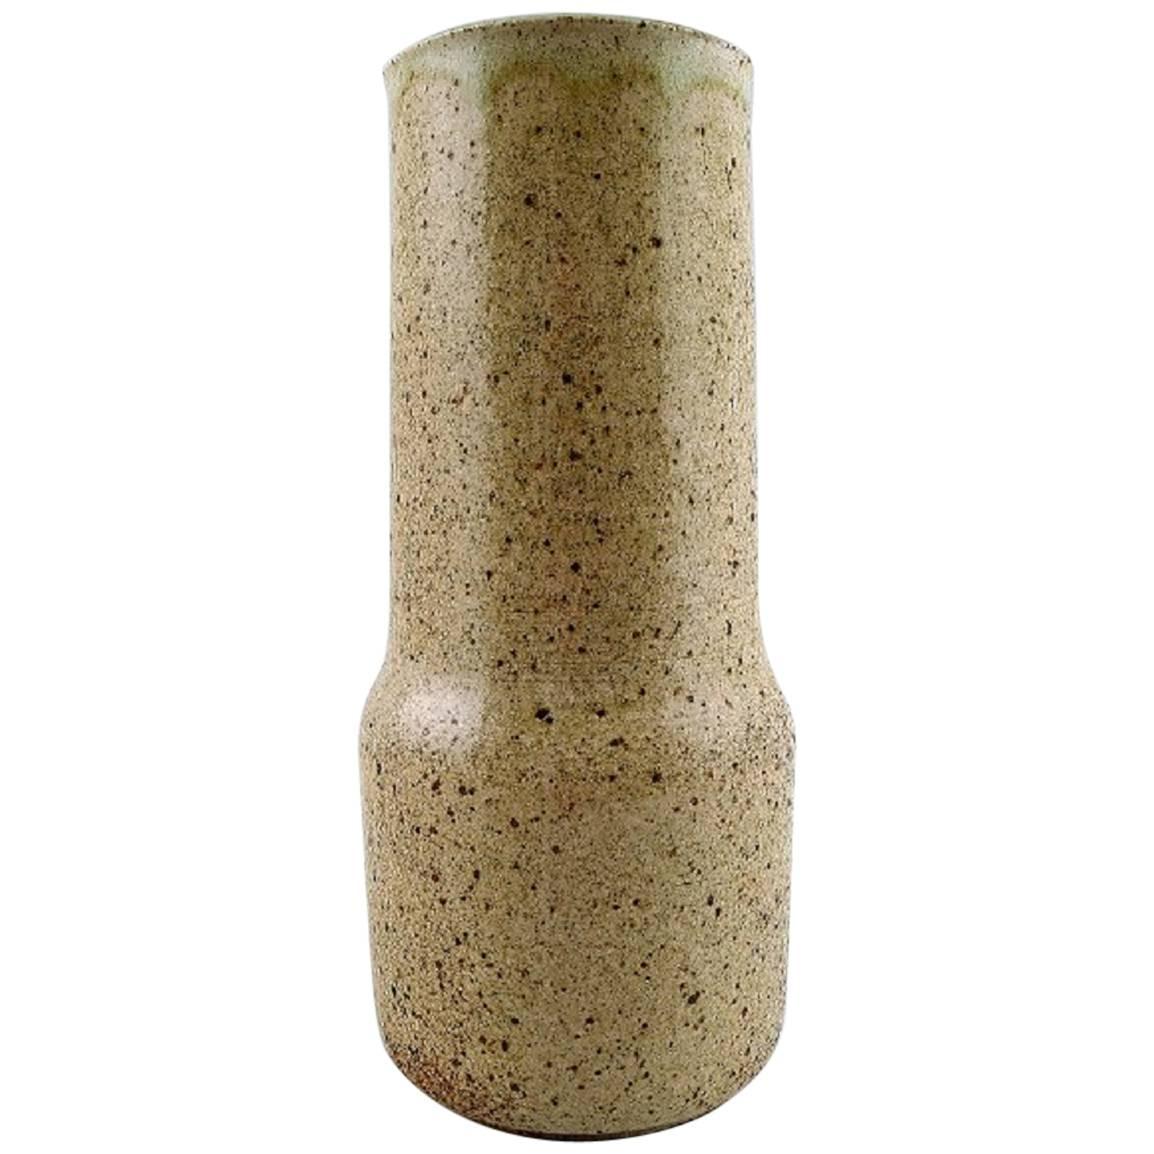 Rare Arne Bang Ceramic Vase, Marked AB 196